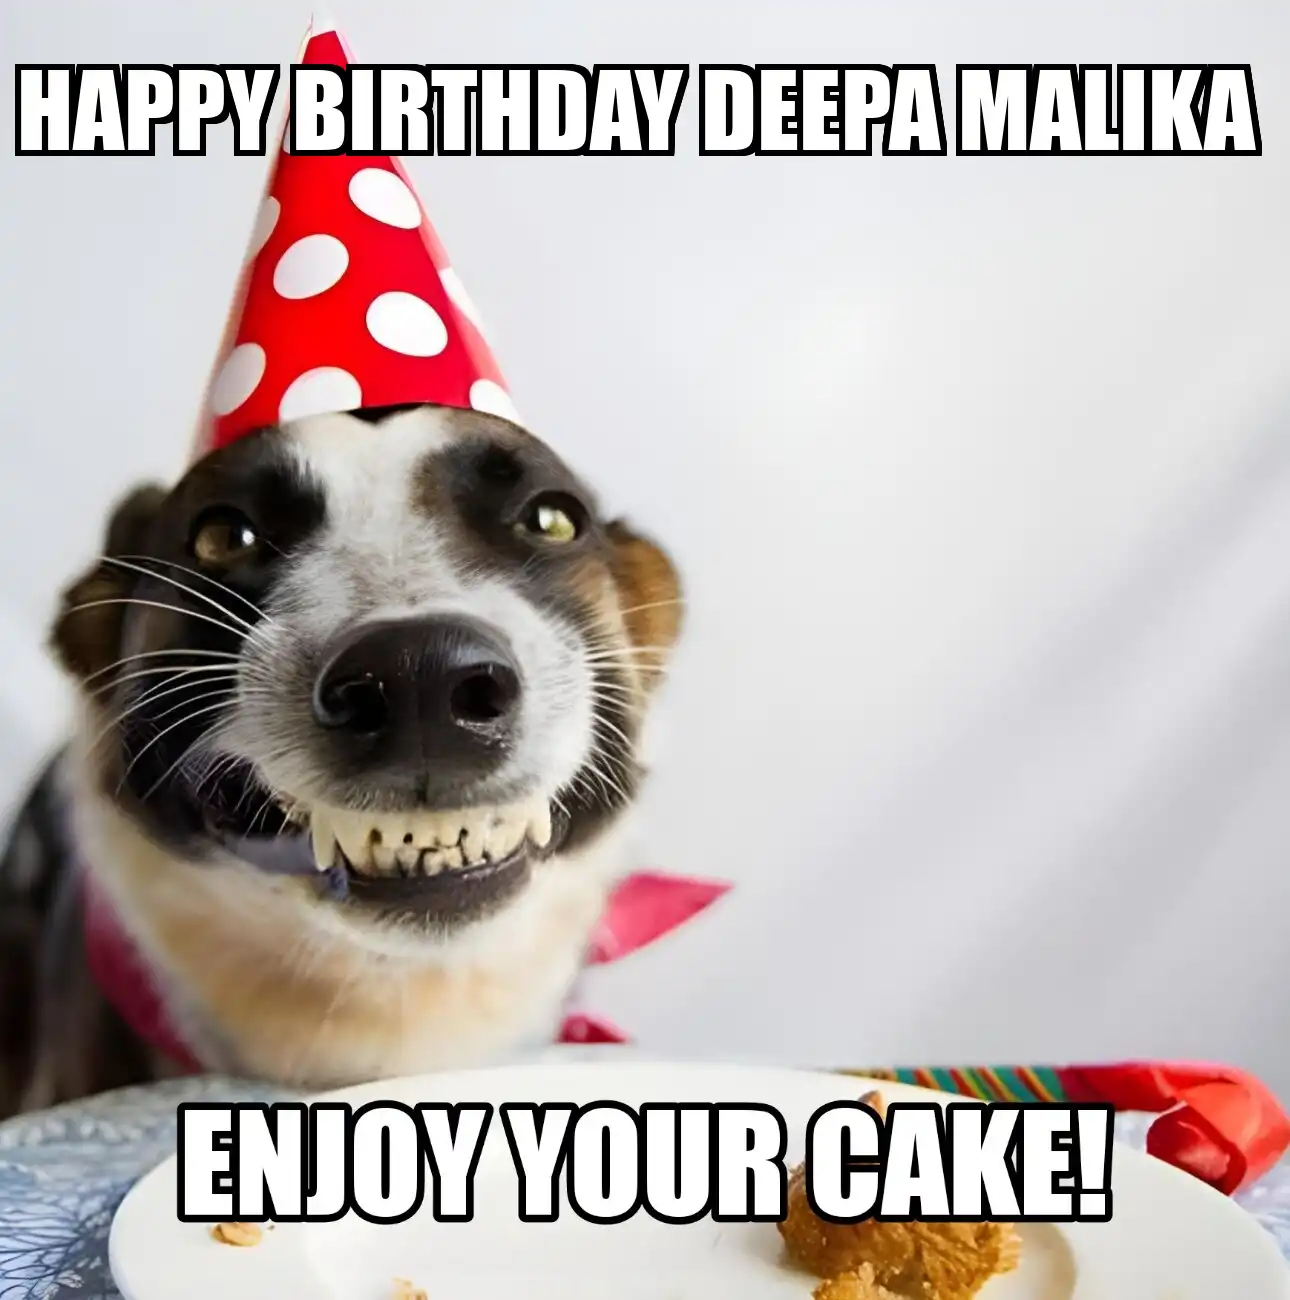 Happy Birthday Deepa malika Enjoy Your Cake Dog Meme